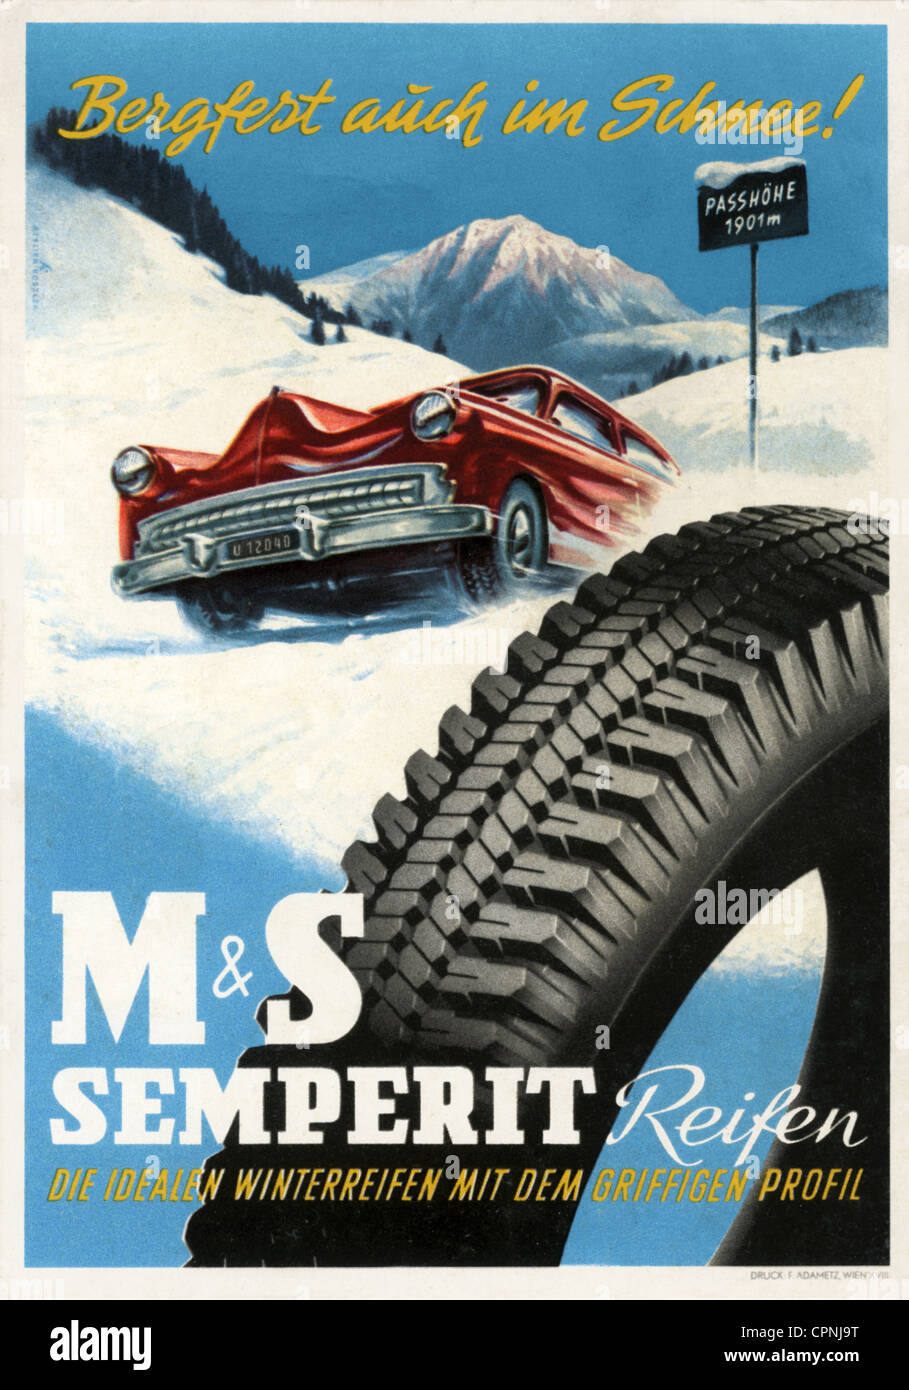 advertising, transport / transportation, Semperit snow tyre, "Bergfest auch  im Schnee", M & S Semperit tyre, the